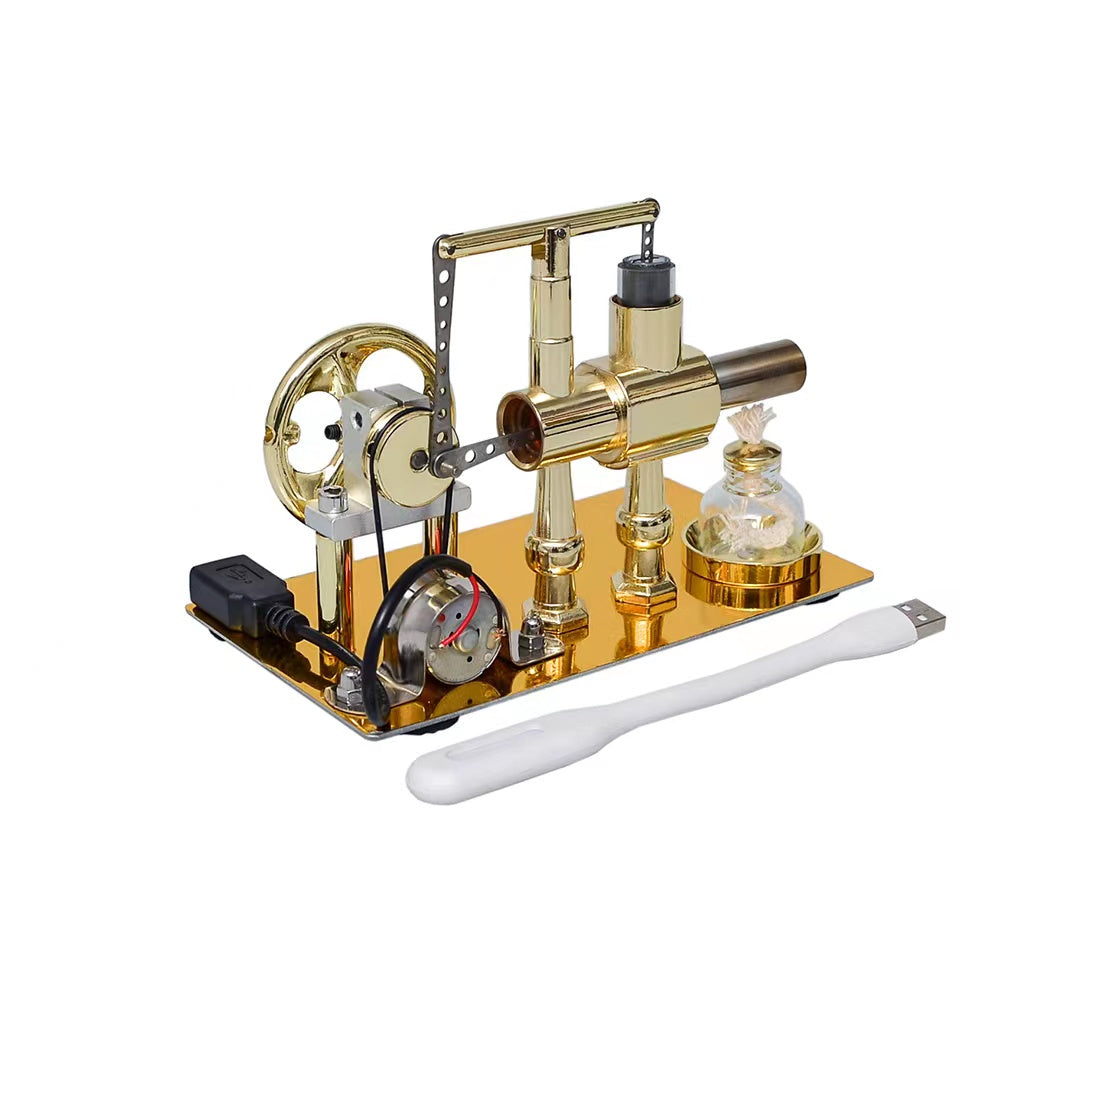 ENJOMOR Balance Single-cylinder Hot Air Stirling Engine Model with USB Light Toys Gifts enginediyshop